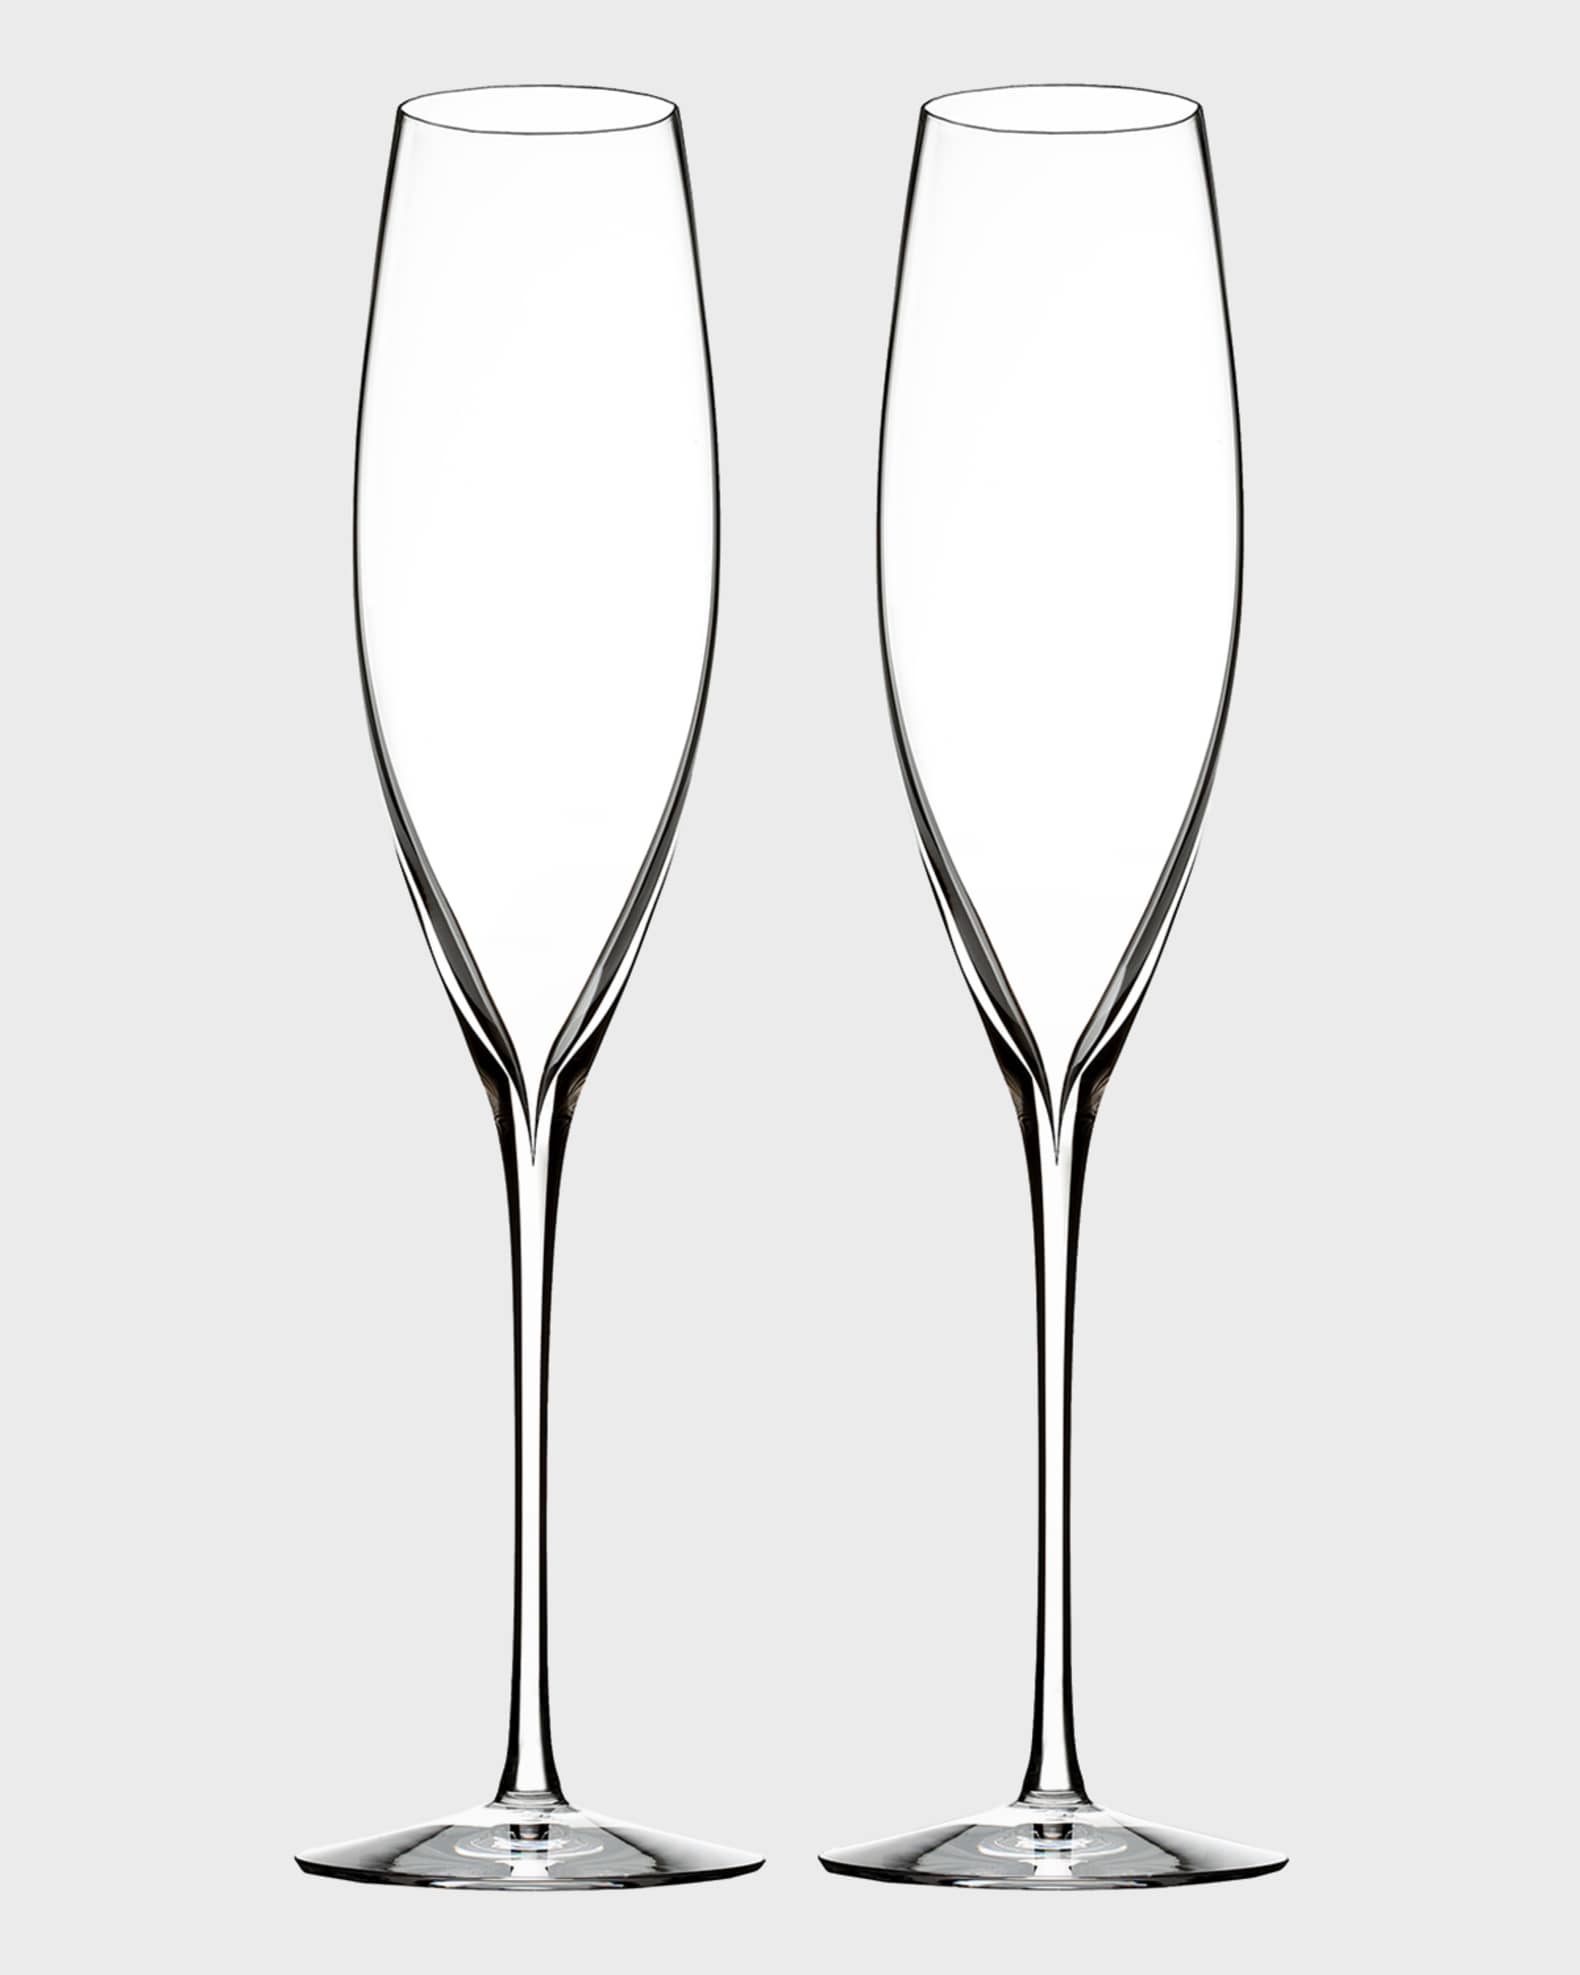 Vintage Tall Trumpet Fluted Champagne Glasses, Set of 2, Wedding